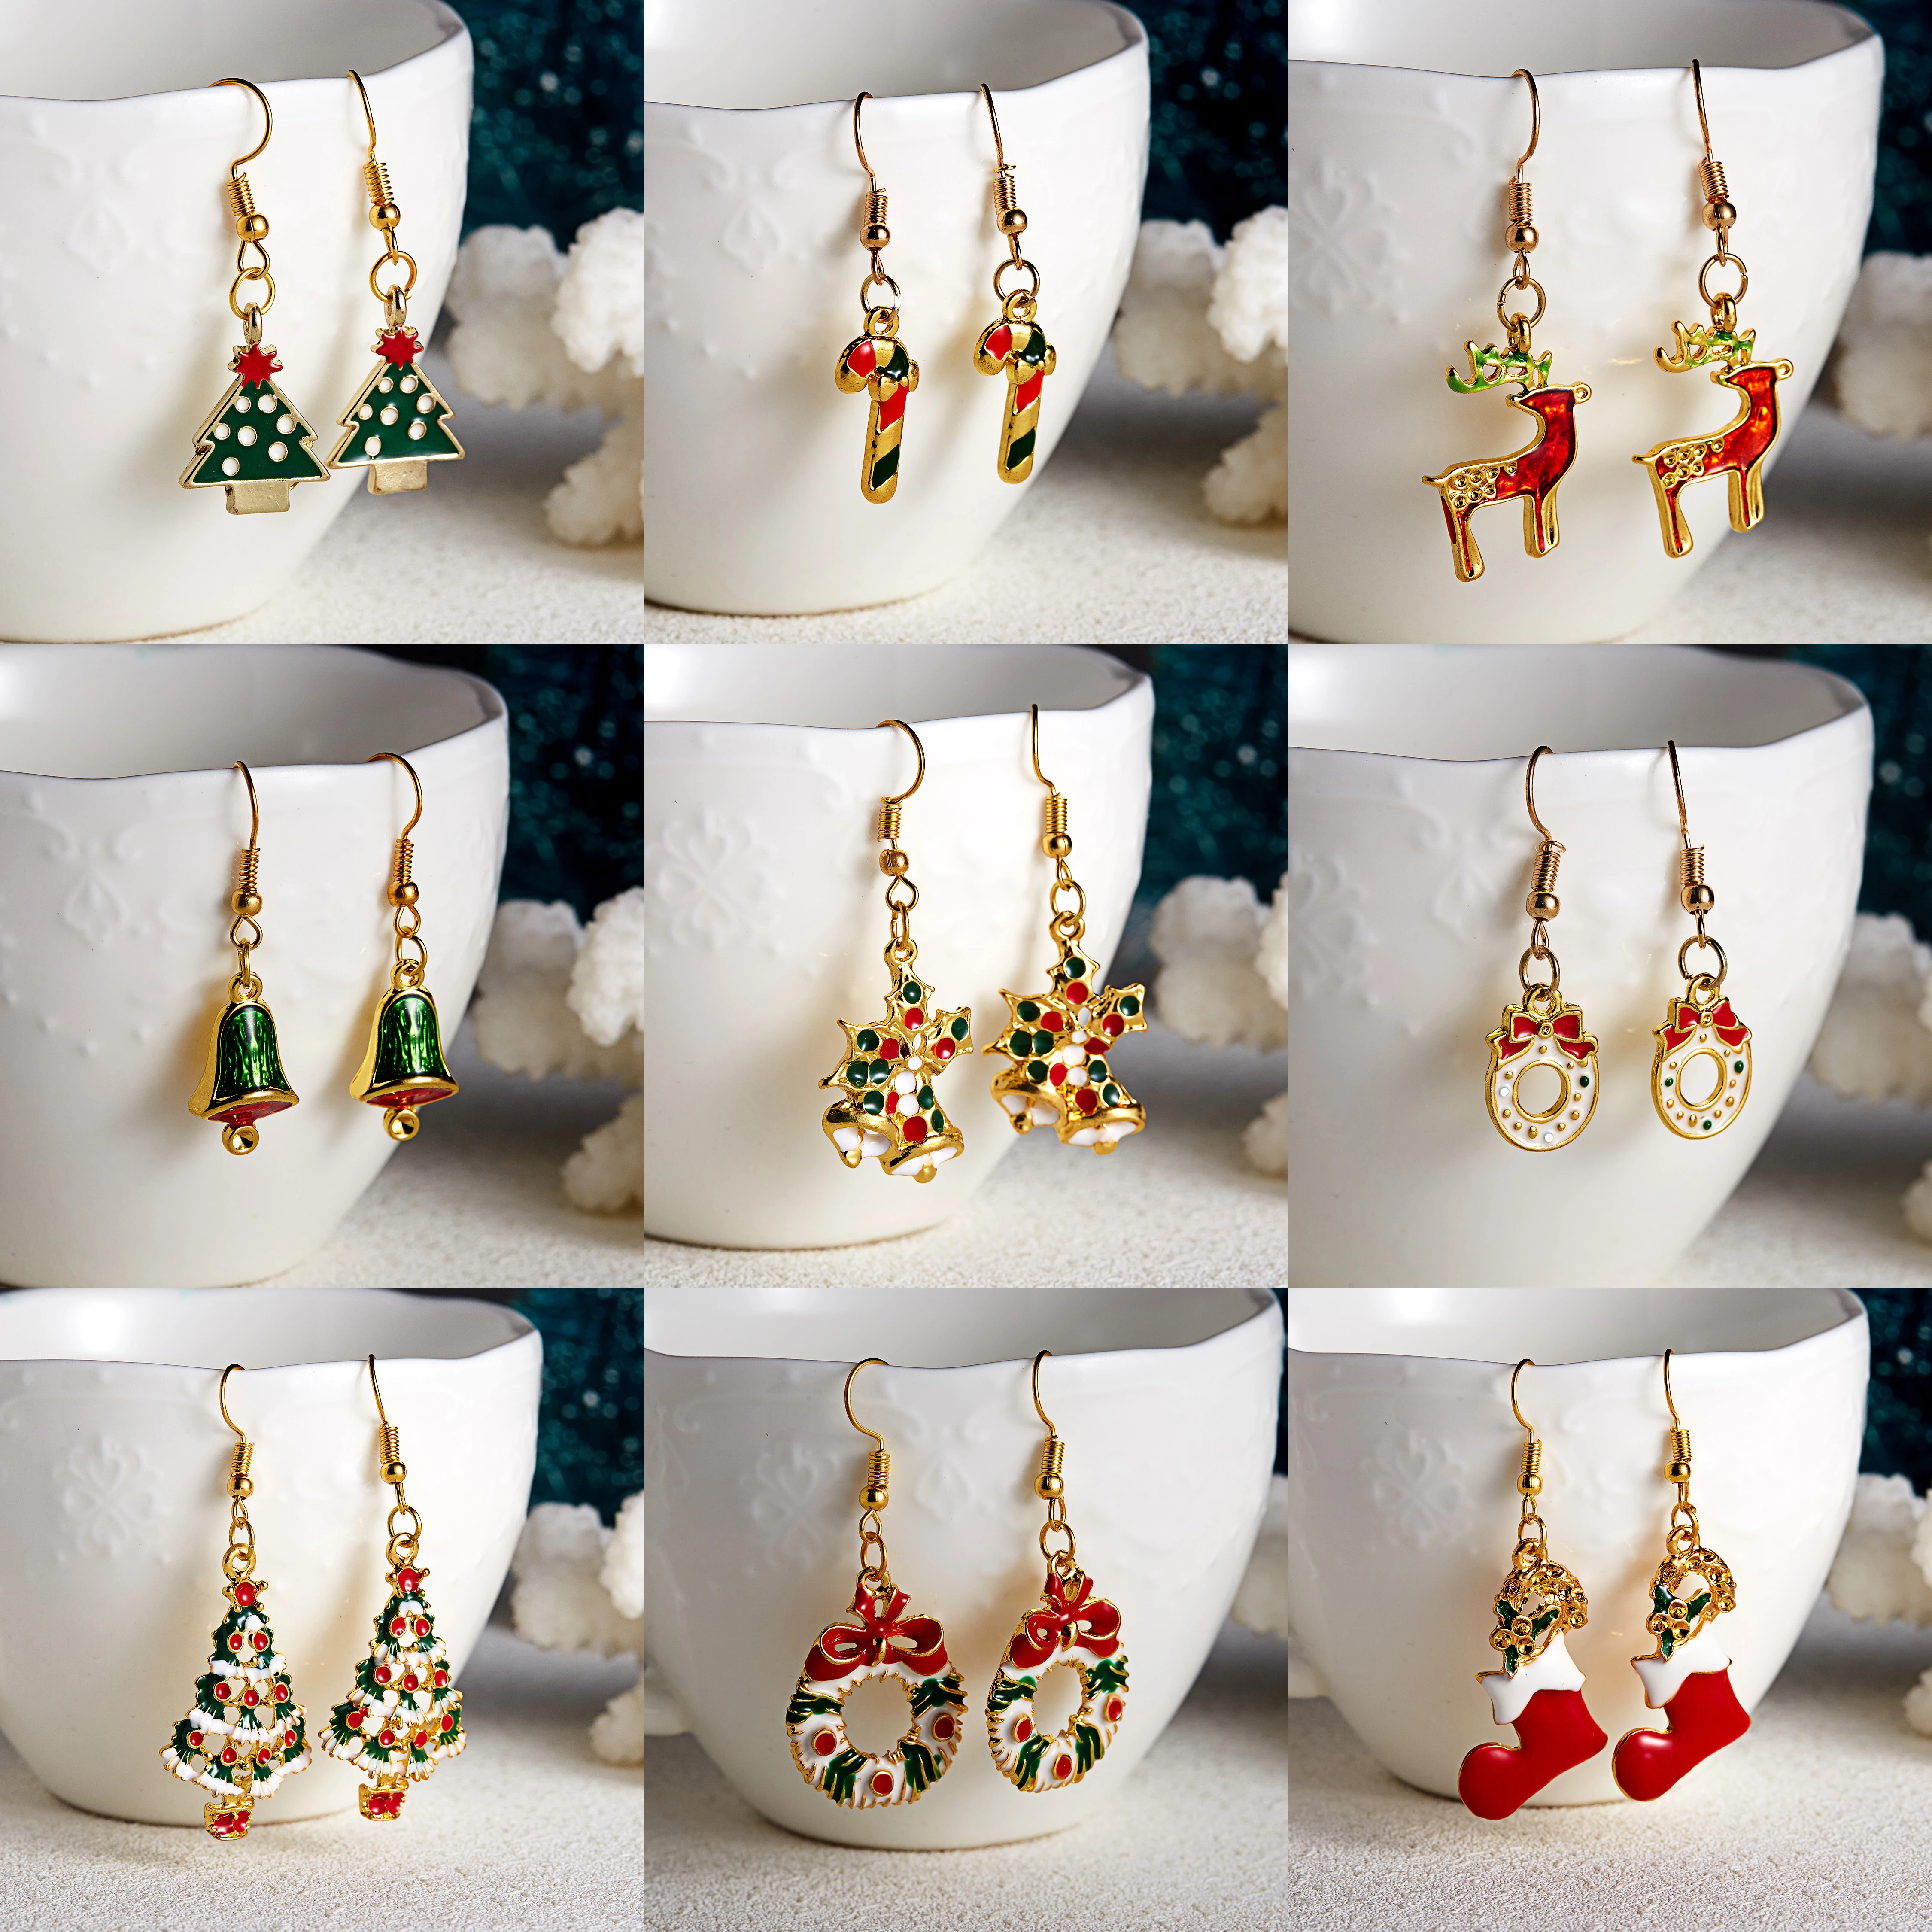 New Xmas Earrings Pendant Christmas Tree Antelope Earrings Claus Boots Drop Earrings Jewelry Accessories